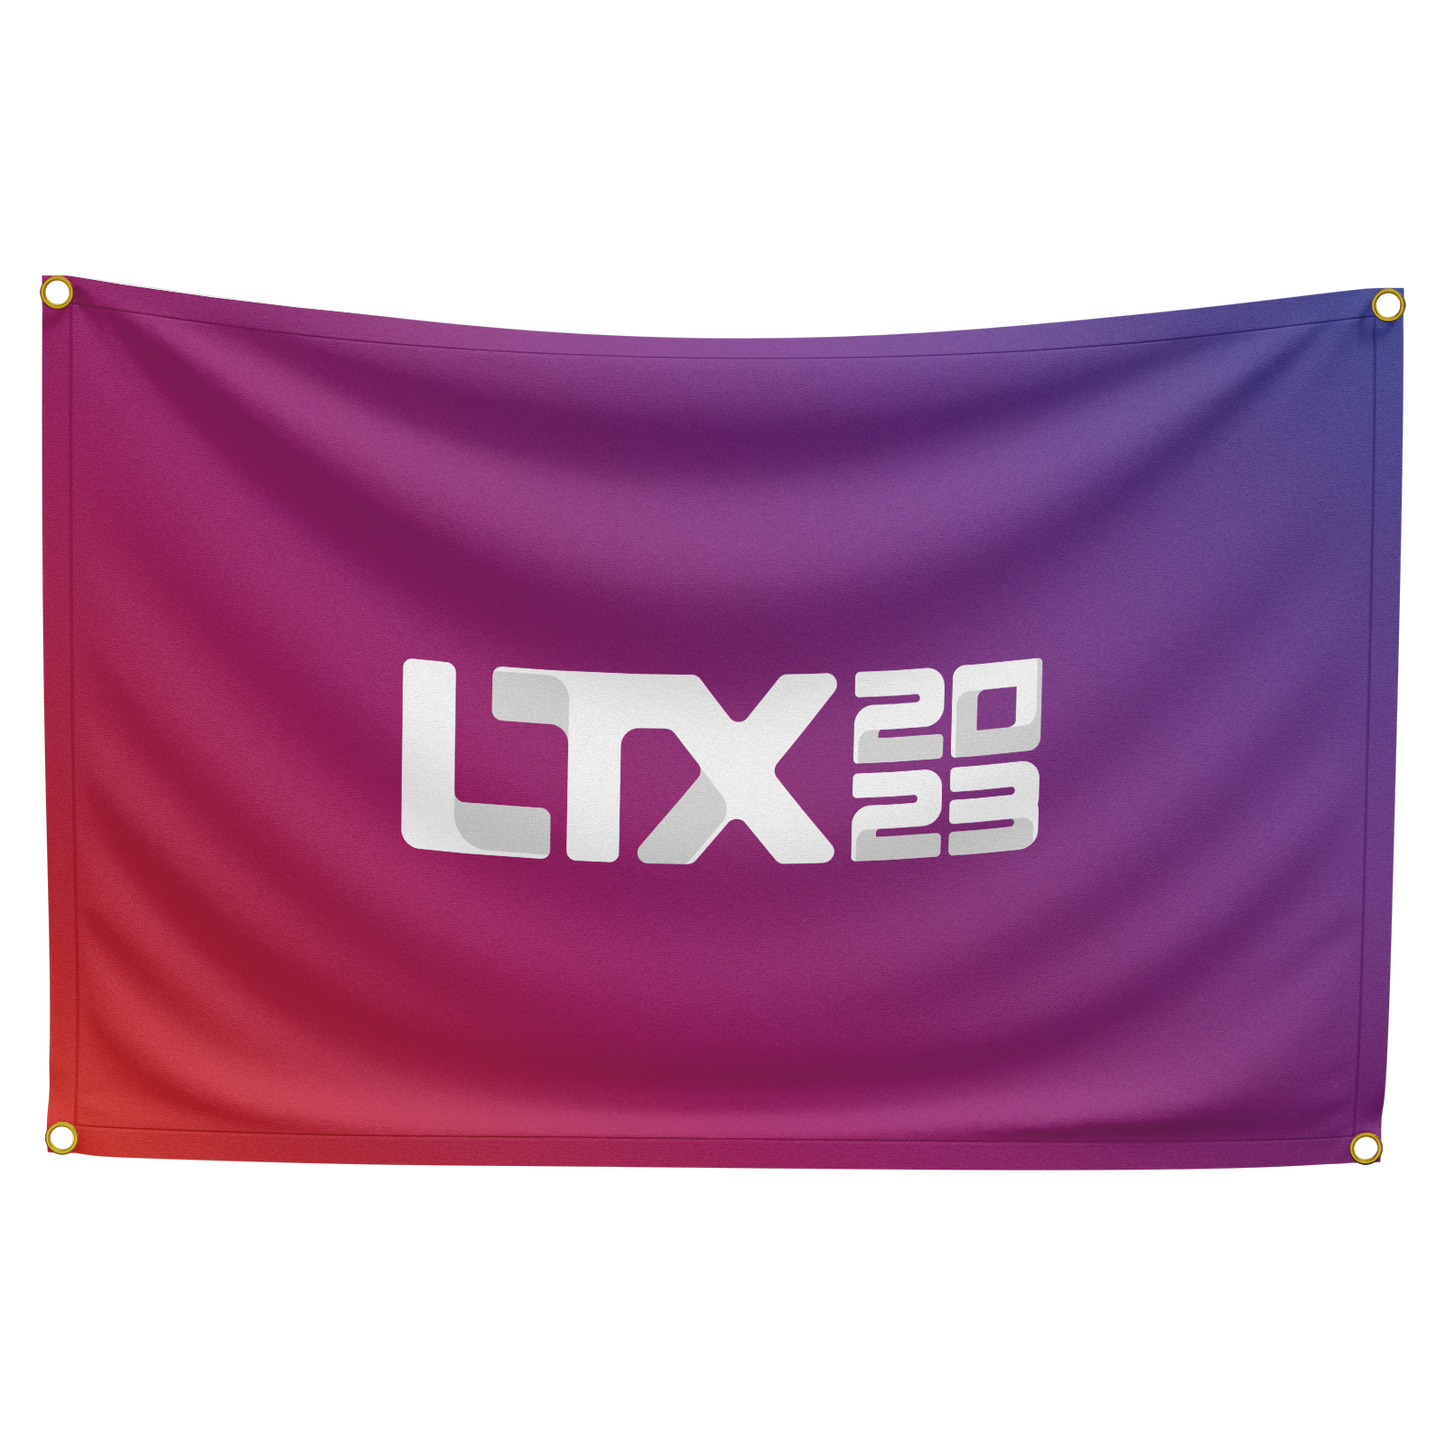 LTX 2023 Flag